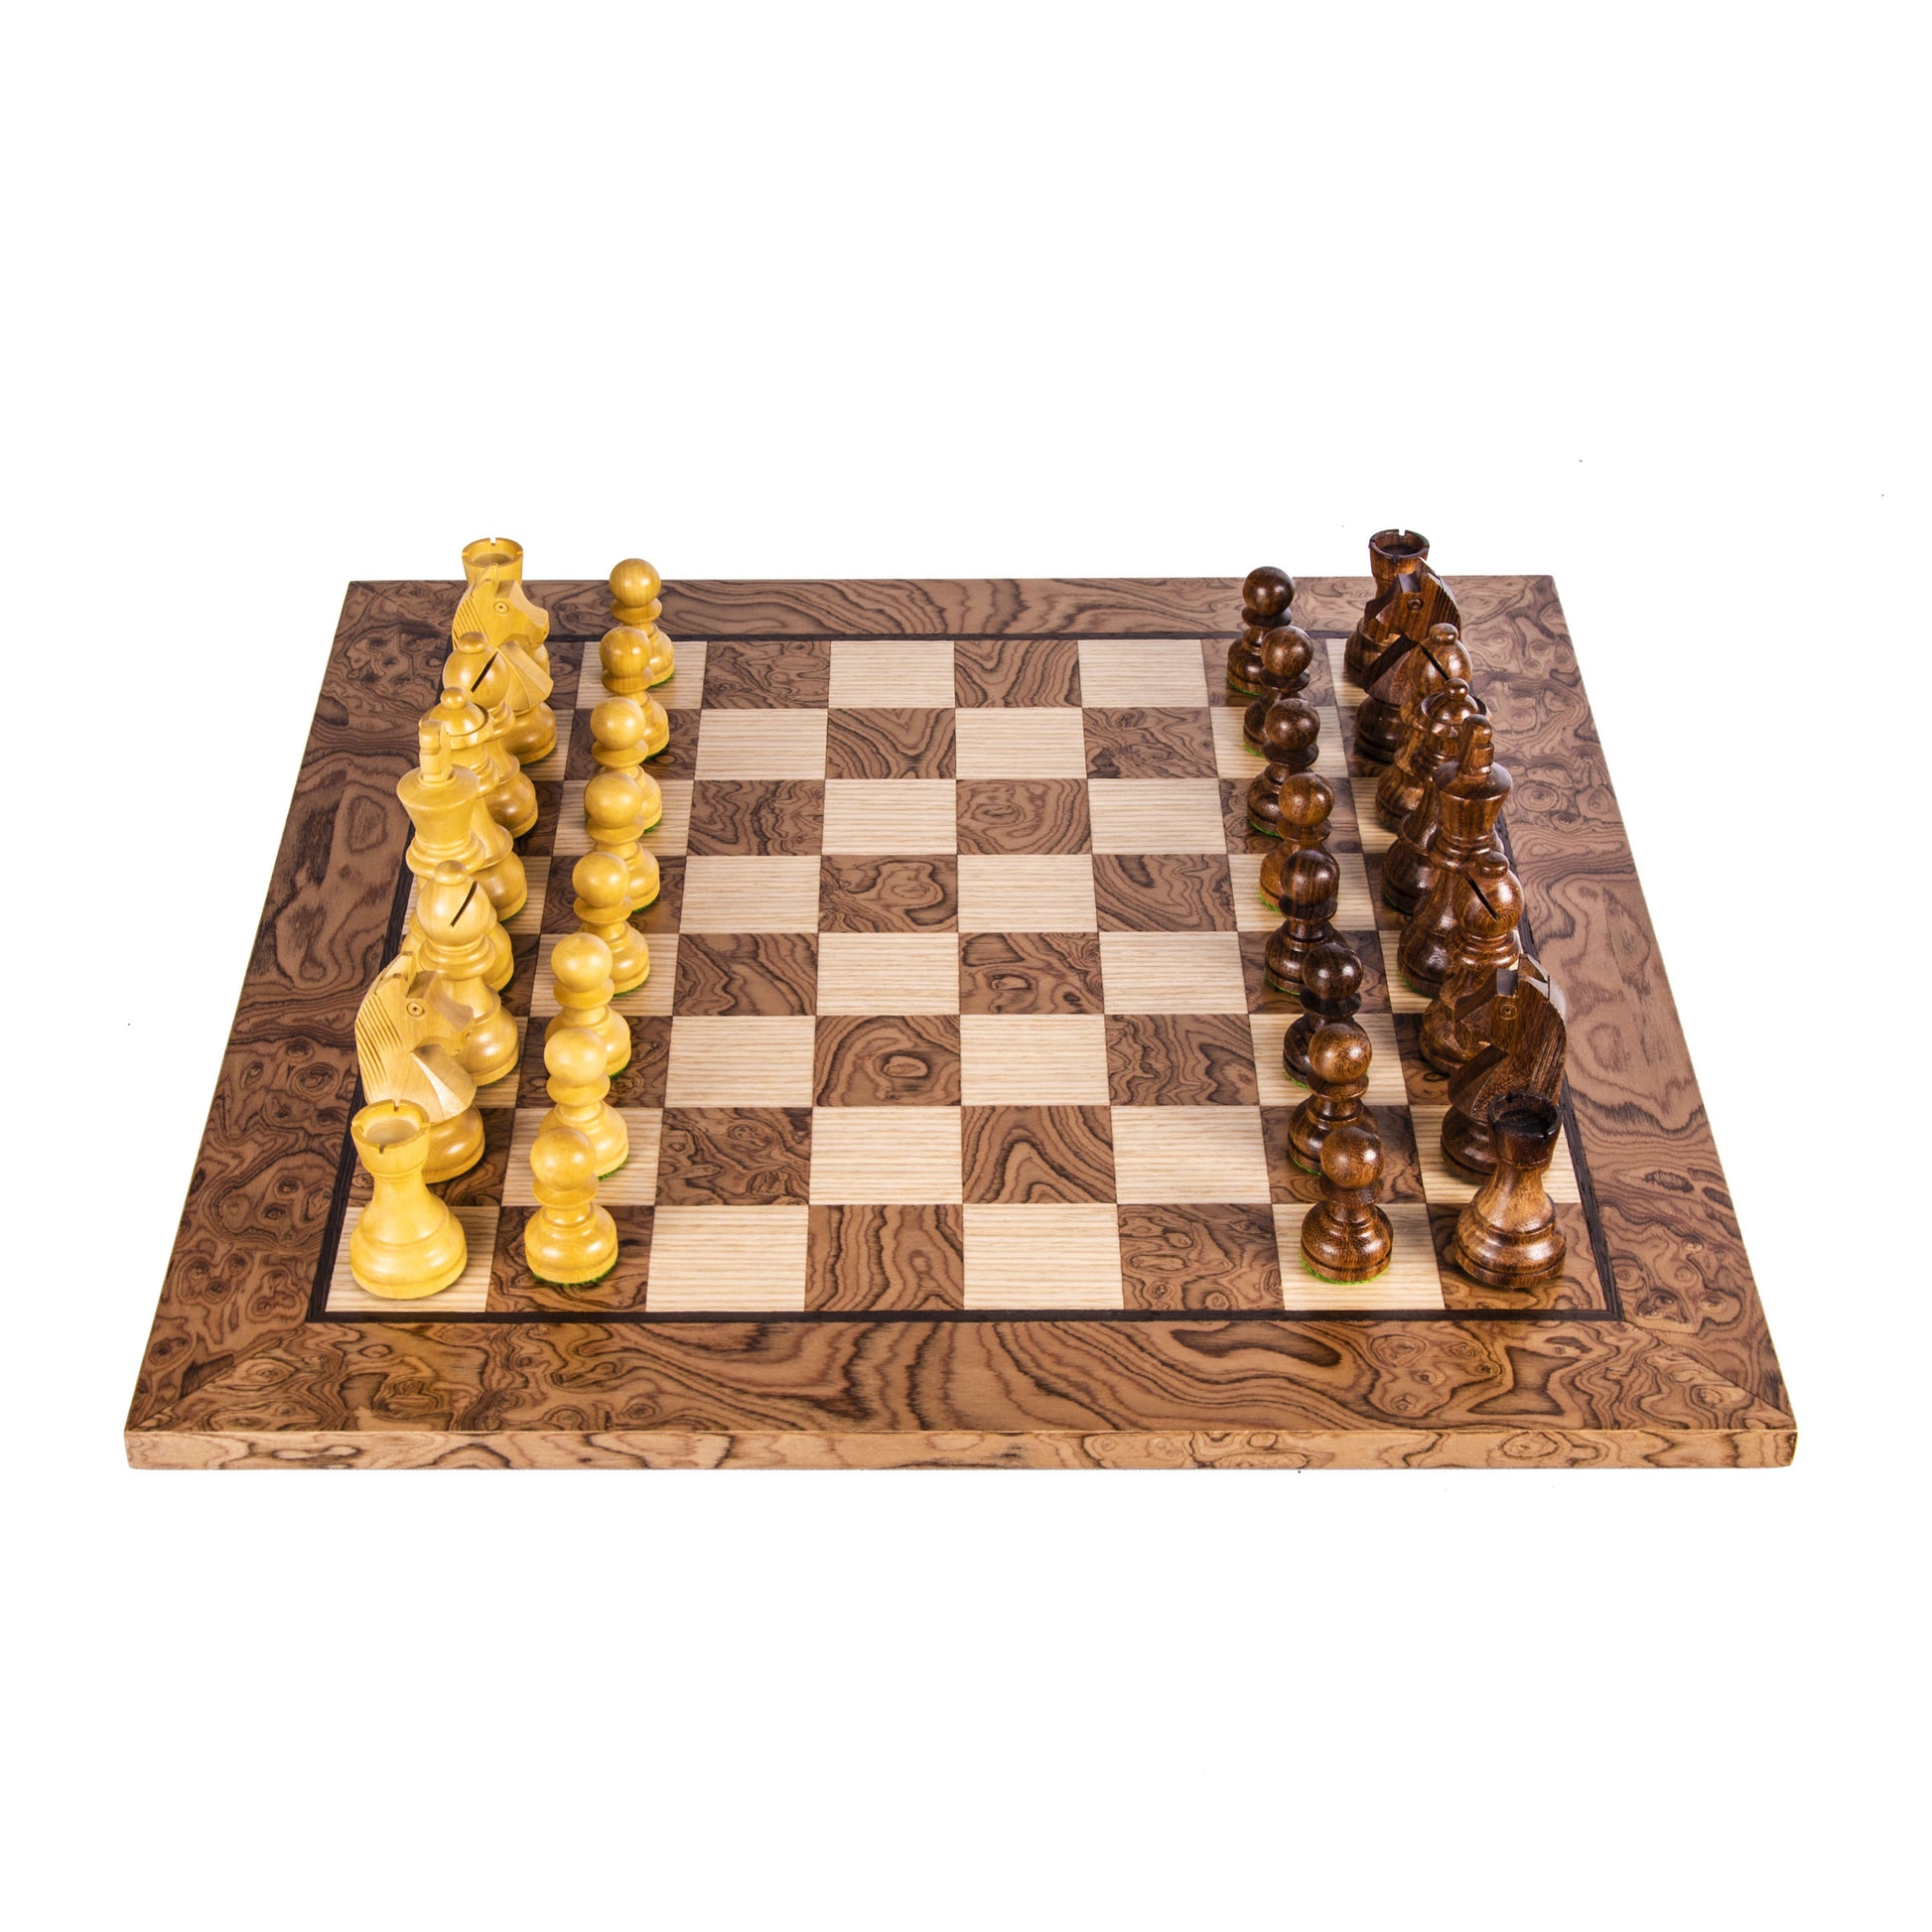 Walnut Burl Chess Set - 50x50cm with Staunton Chessmen (8.5cm King) - Premium Chess from MANOPOULOS Chess & Backgammon - Just €270! Shop now at MANOPOULOS Chess & Backgammon